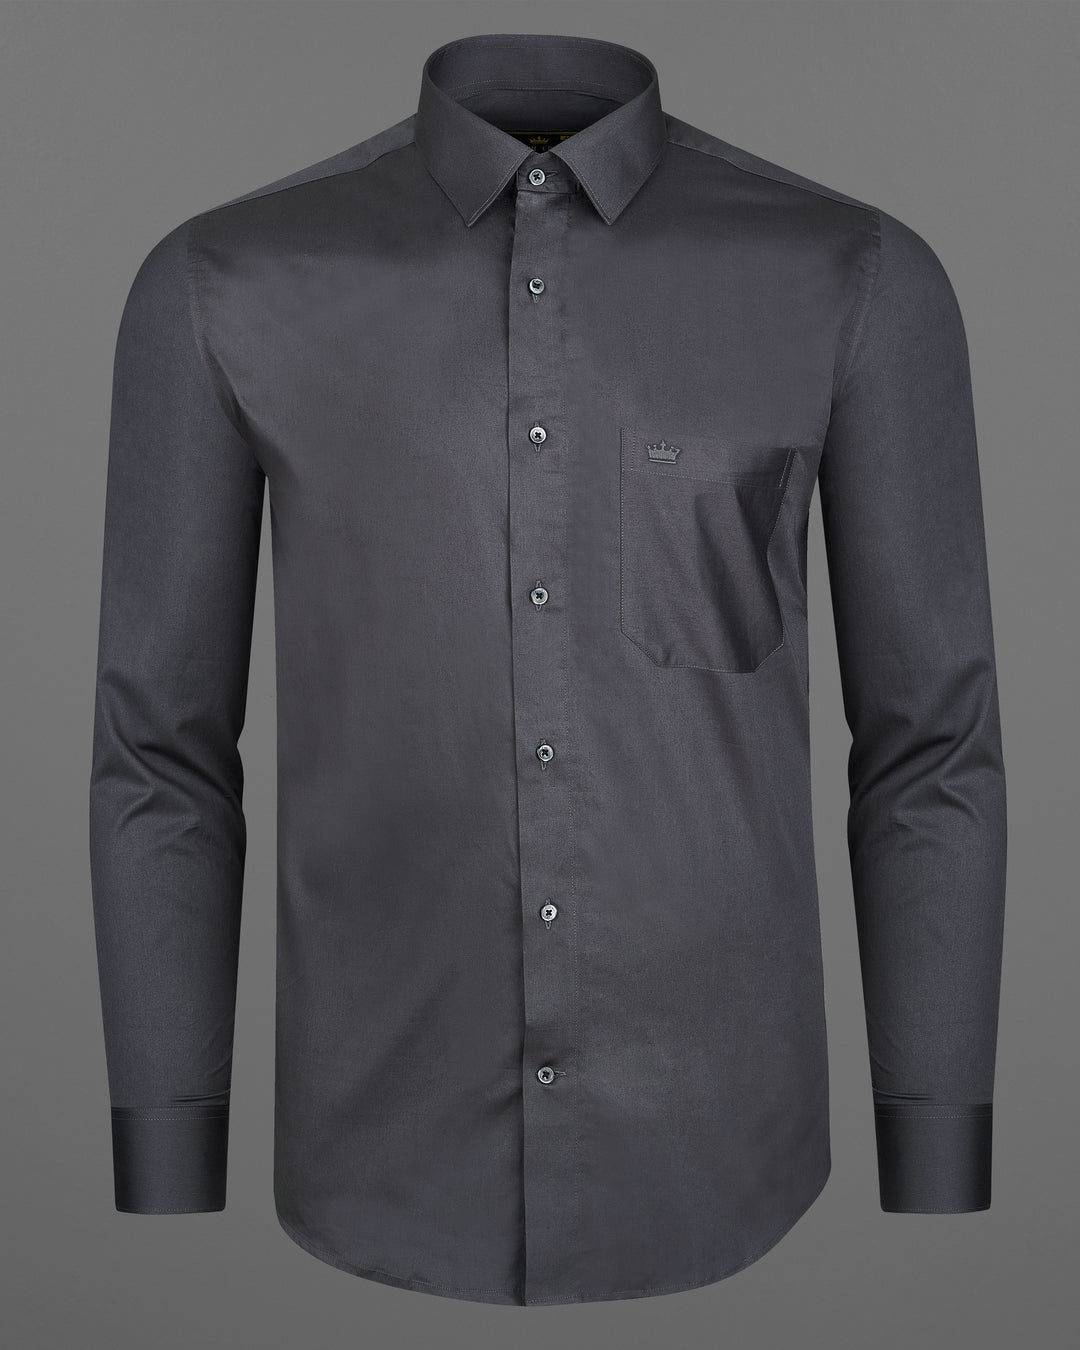 Grey Shirt Matching Pant Ideas | Grey Shirt Combination Pants - TiptopGents